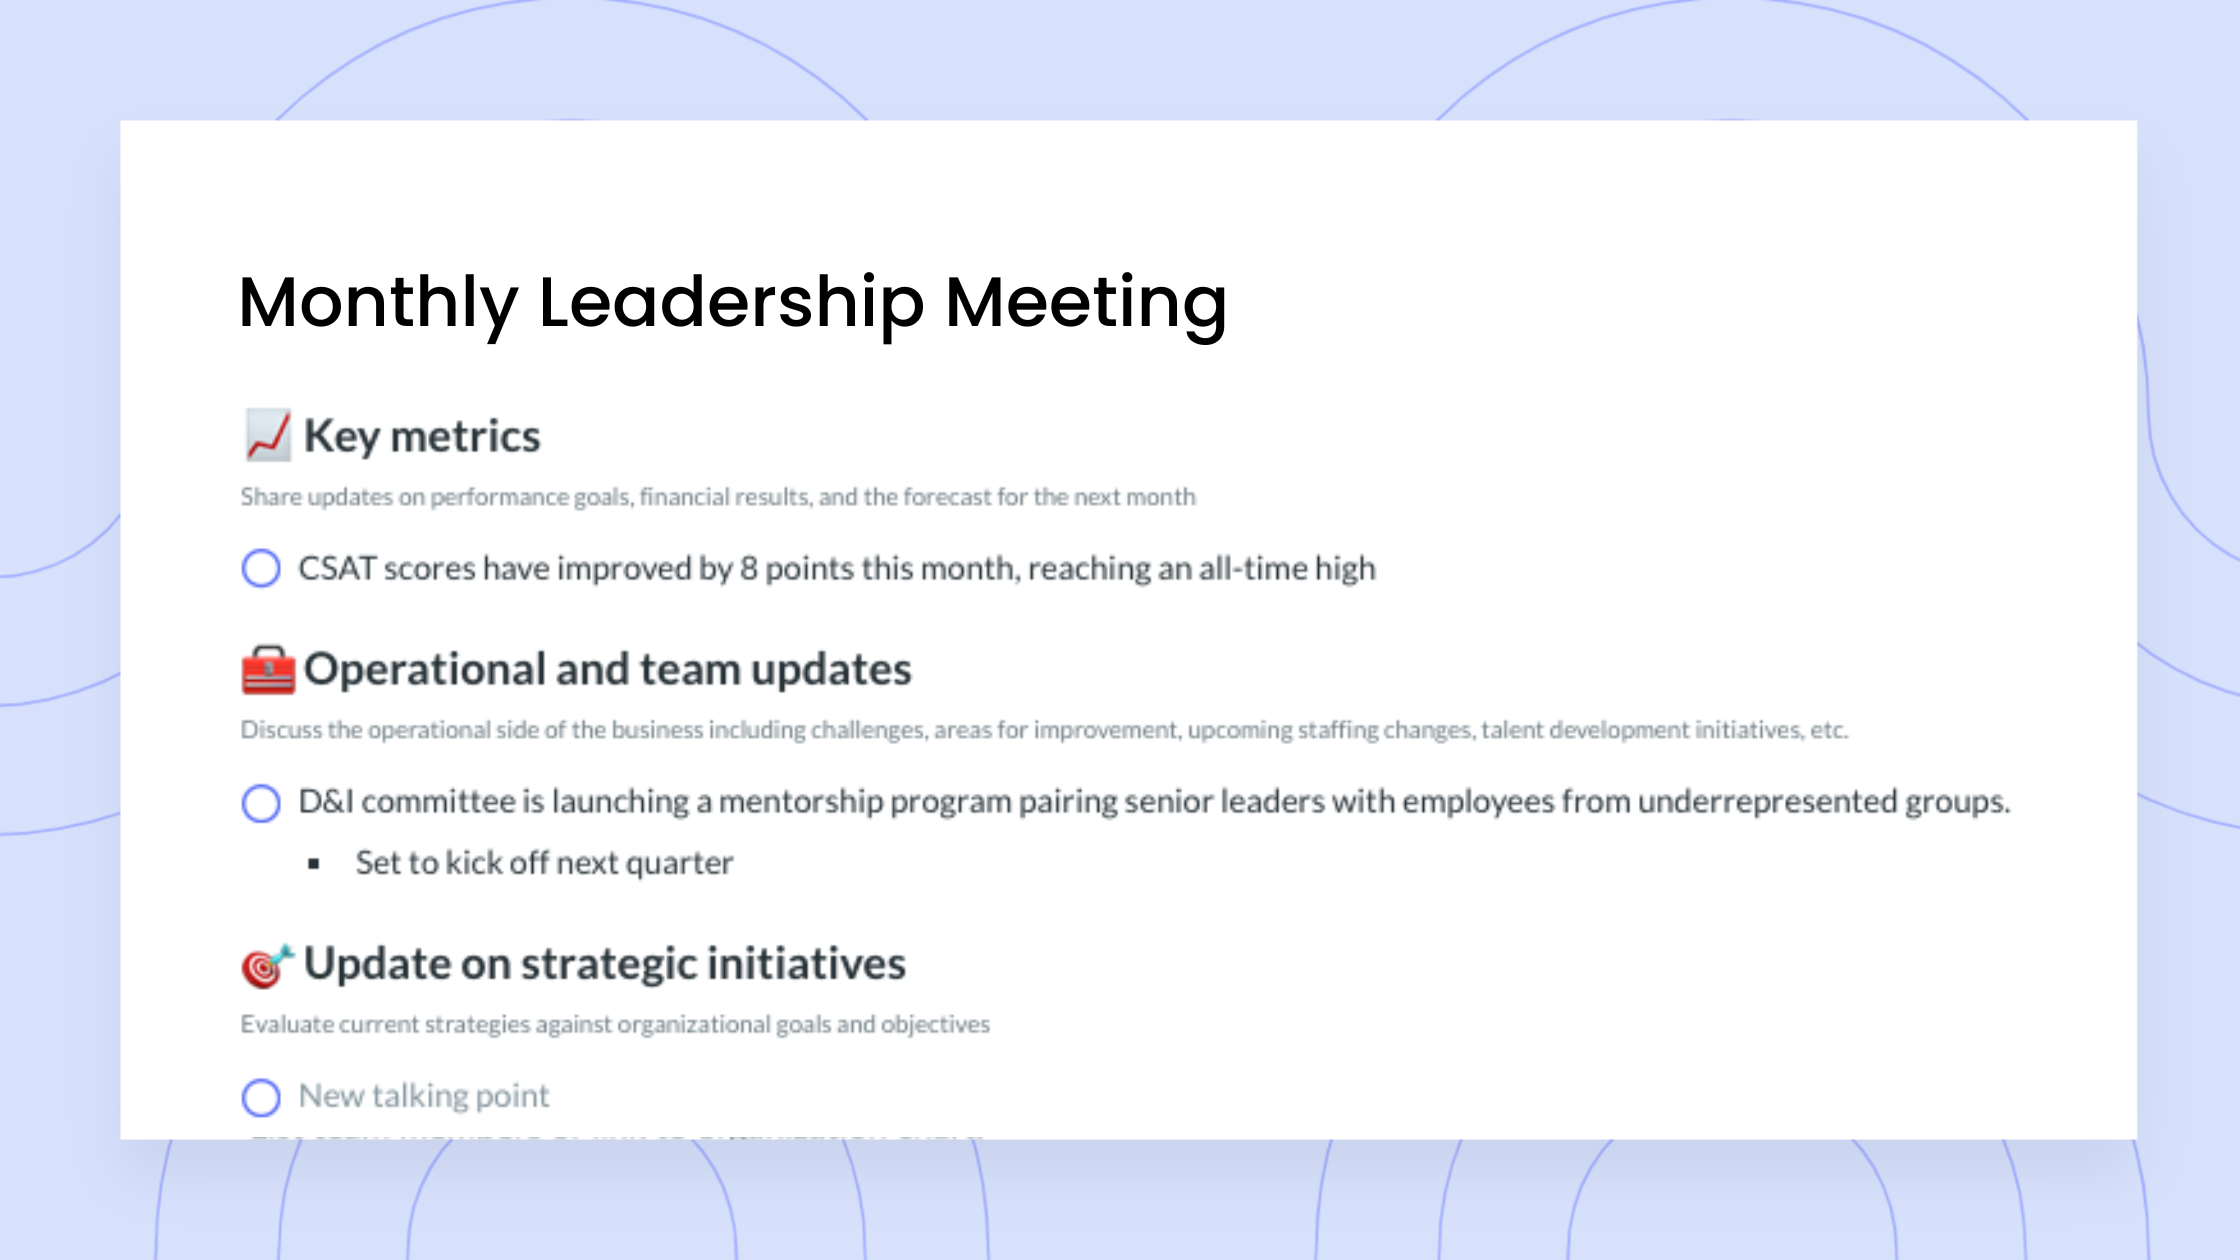 Monthly Leadership Meeting Agenda Template